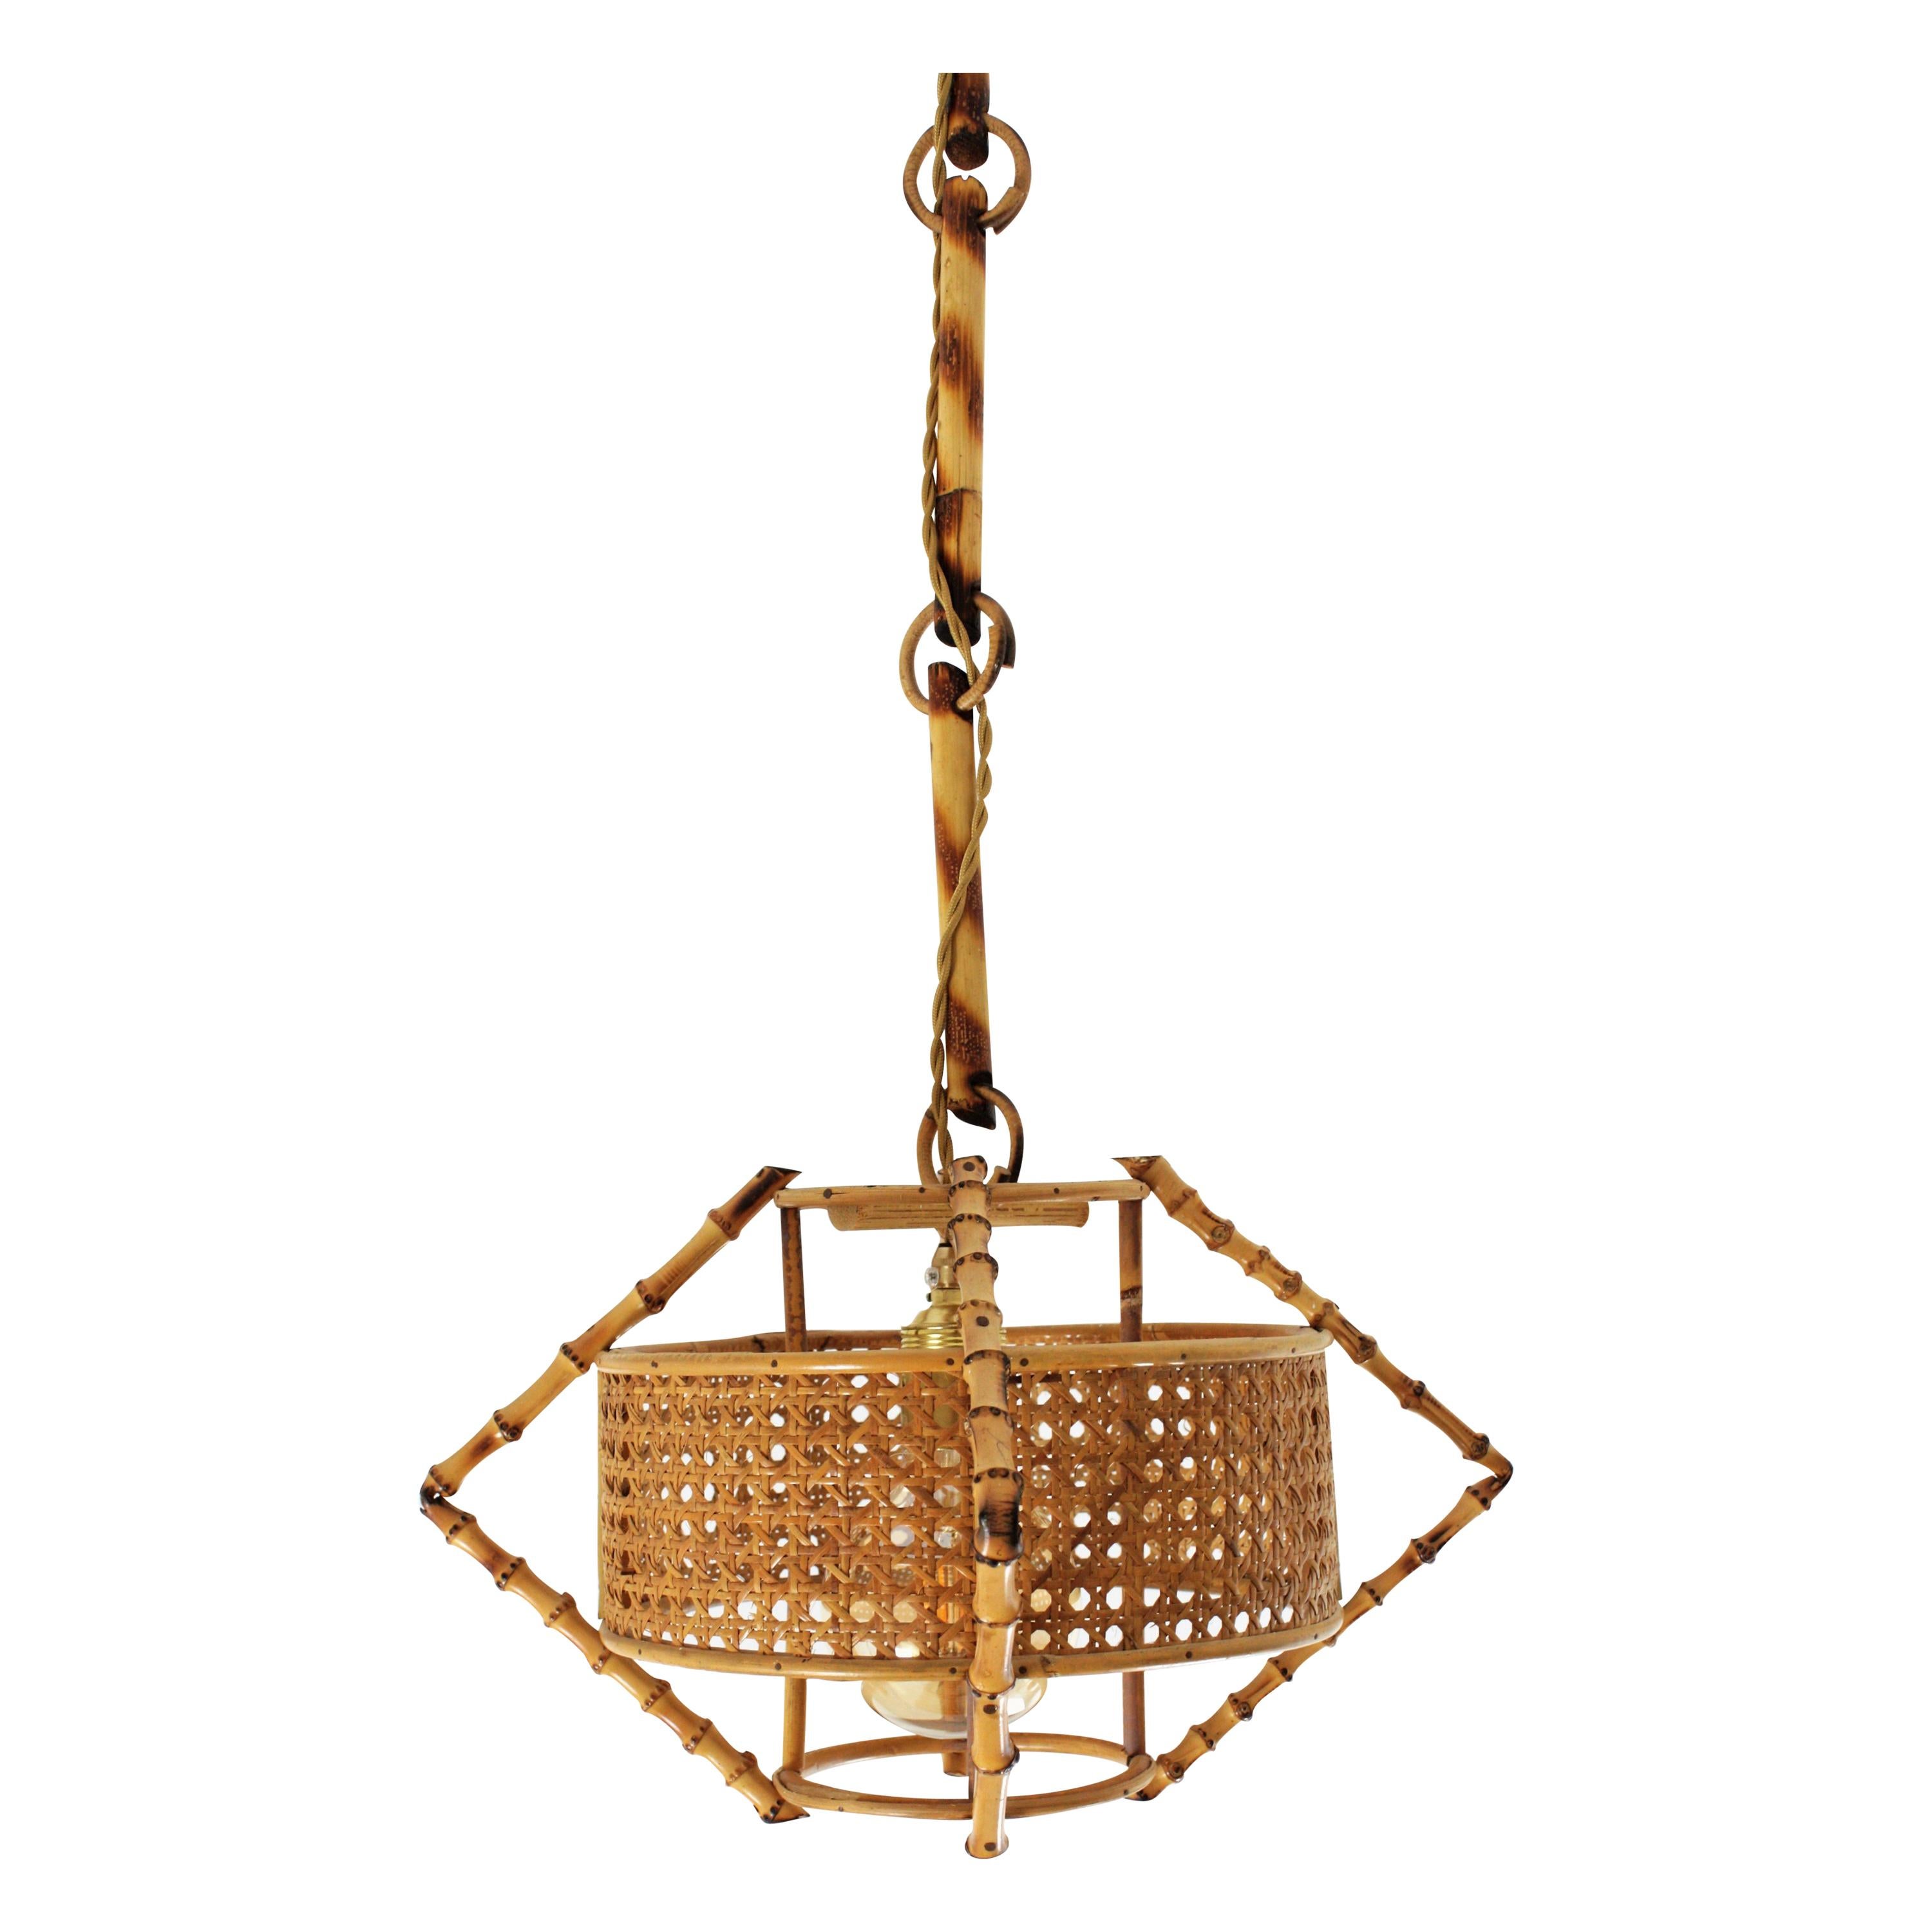 Spanish Mid-Century Modern Bamboo Rattan & Wicker Pendant Lamp with Tiki Accents